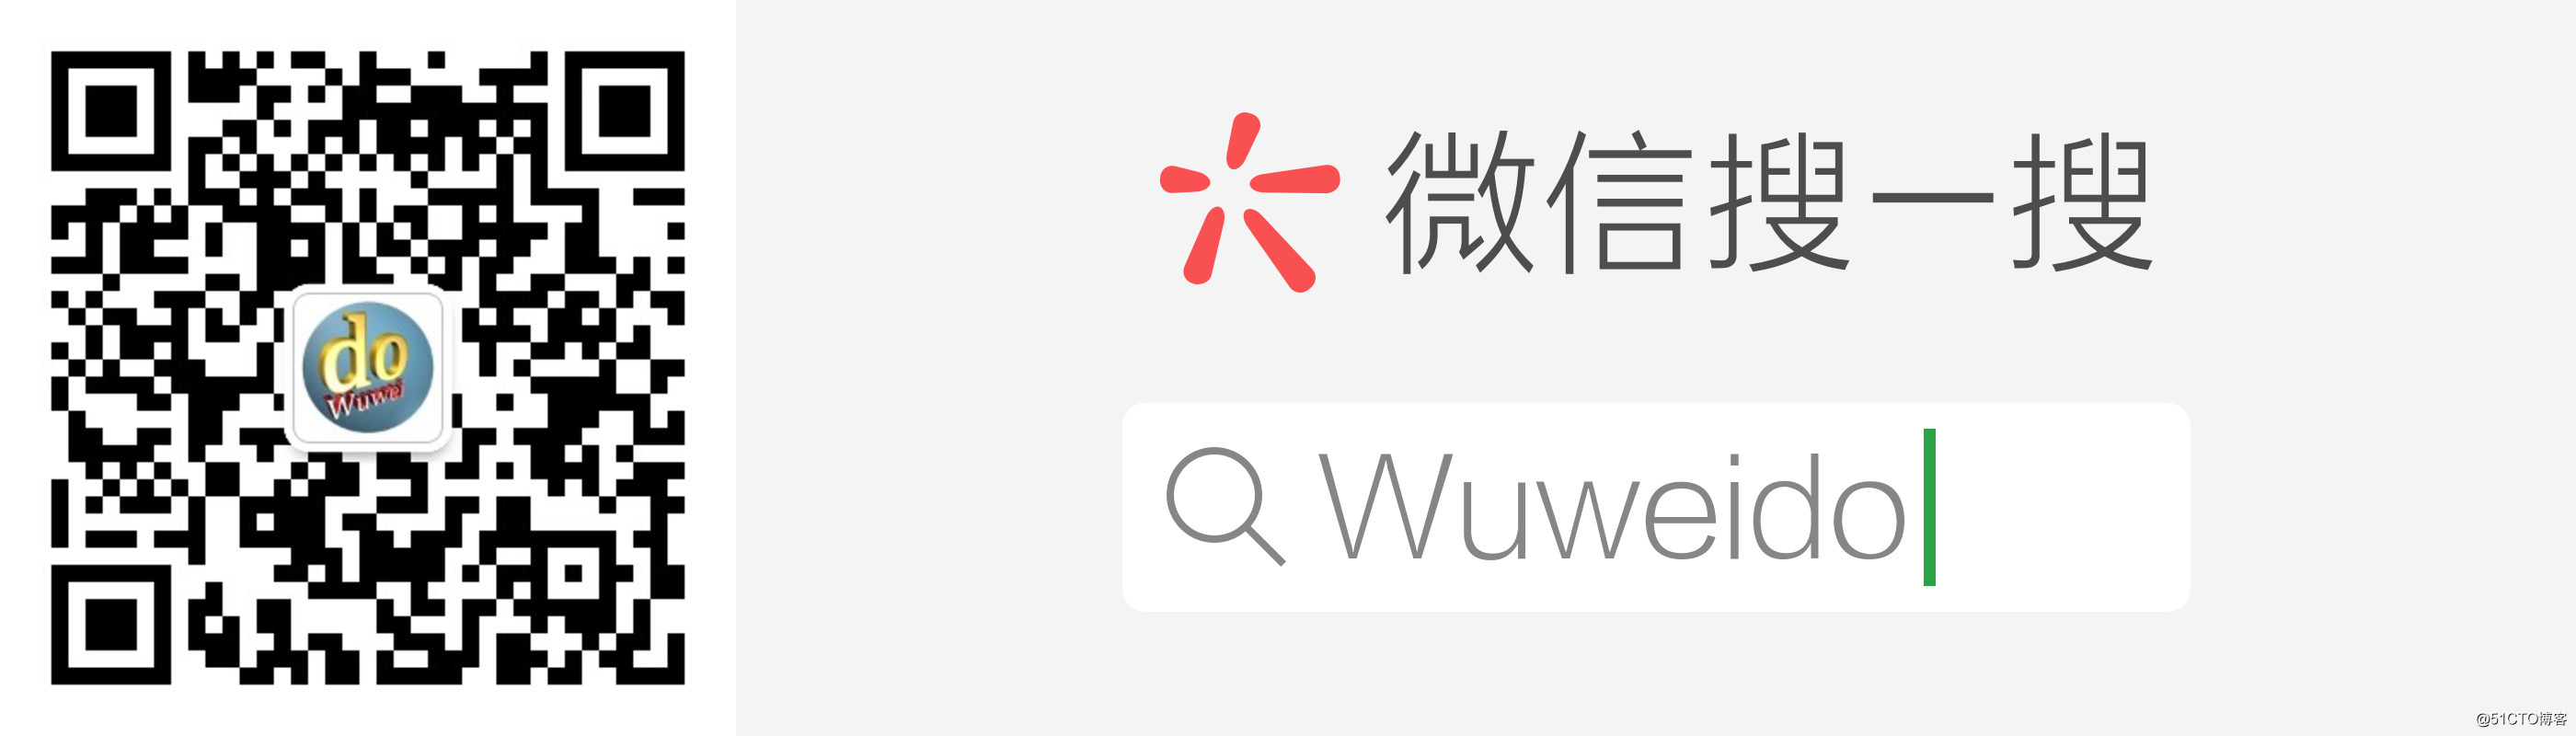 Wuweido 3d mobile cad - 手机三维建模